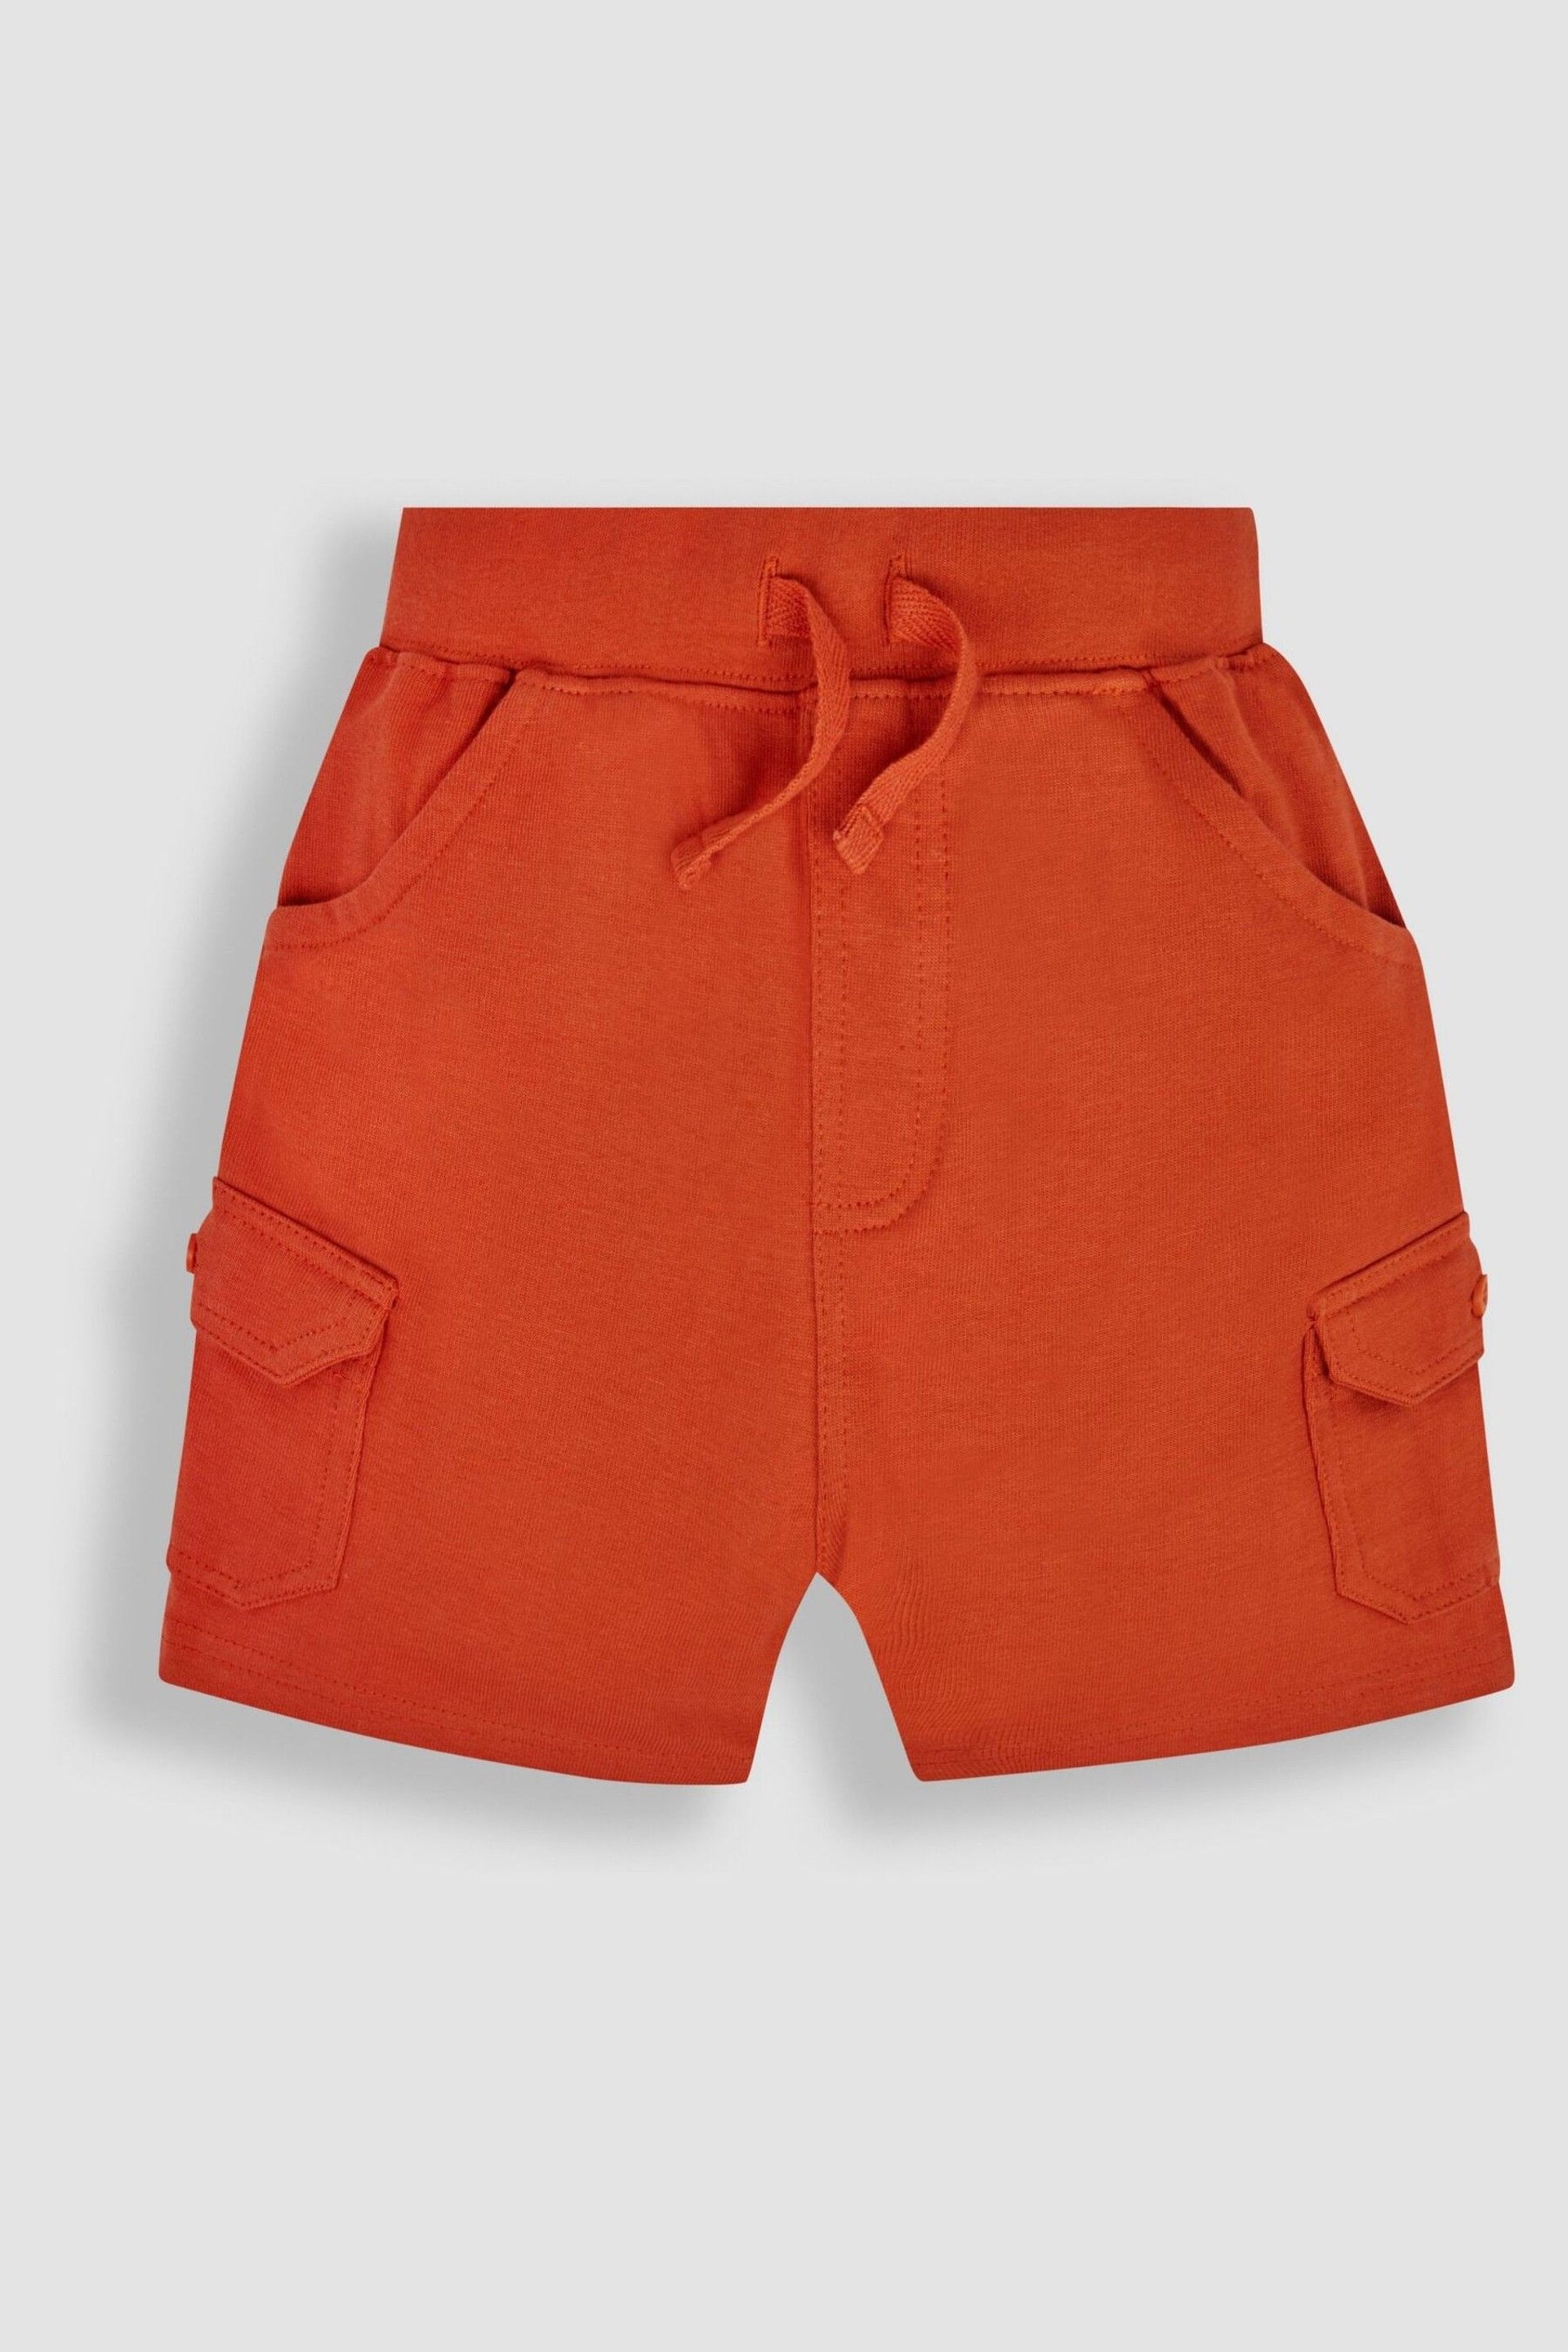 JoJo Maman Bébé Orange 2-Pack Jersey Cargo Shorts - Image 3 of 5